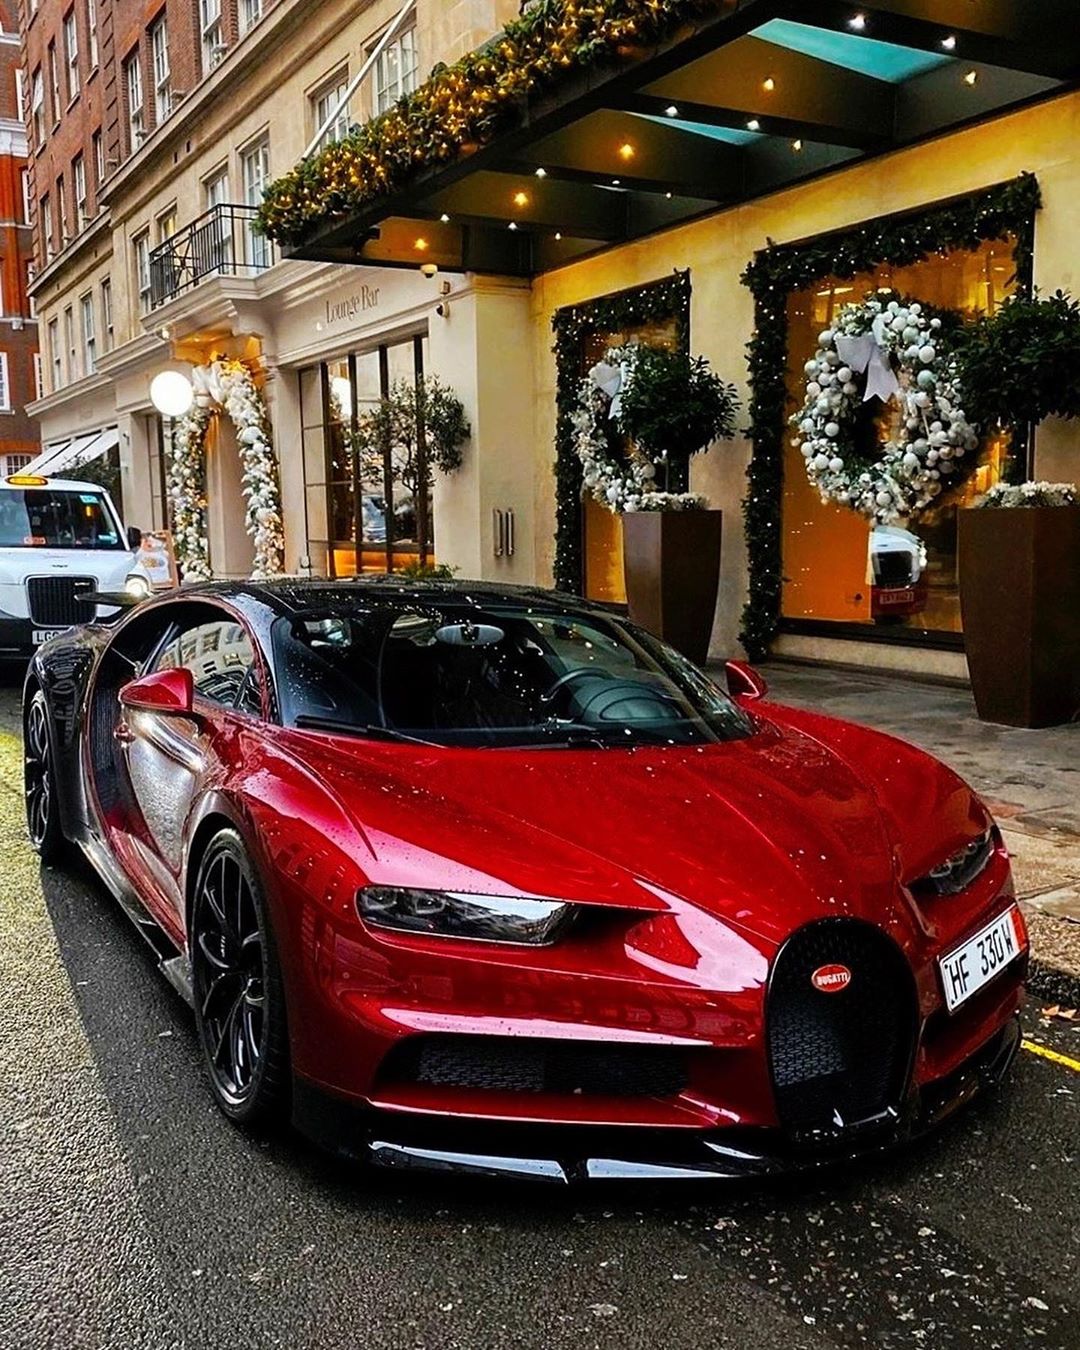 Merry Christmas everyone! #Bugatti #Chiron #BugattiChiron #MerryChristmas #Sport #Racing #Luxury #Coupe